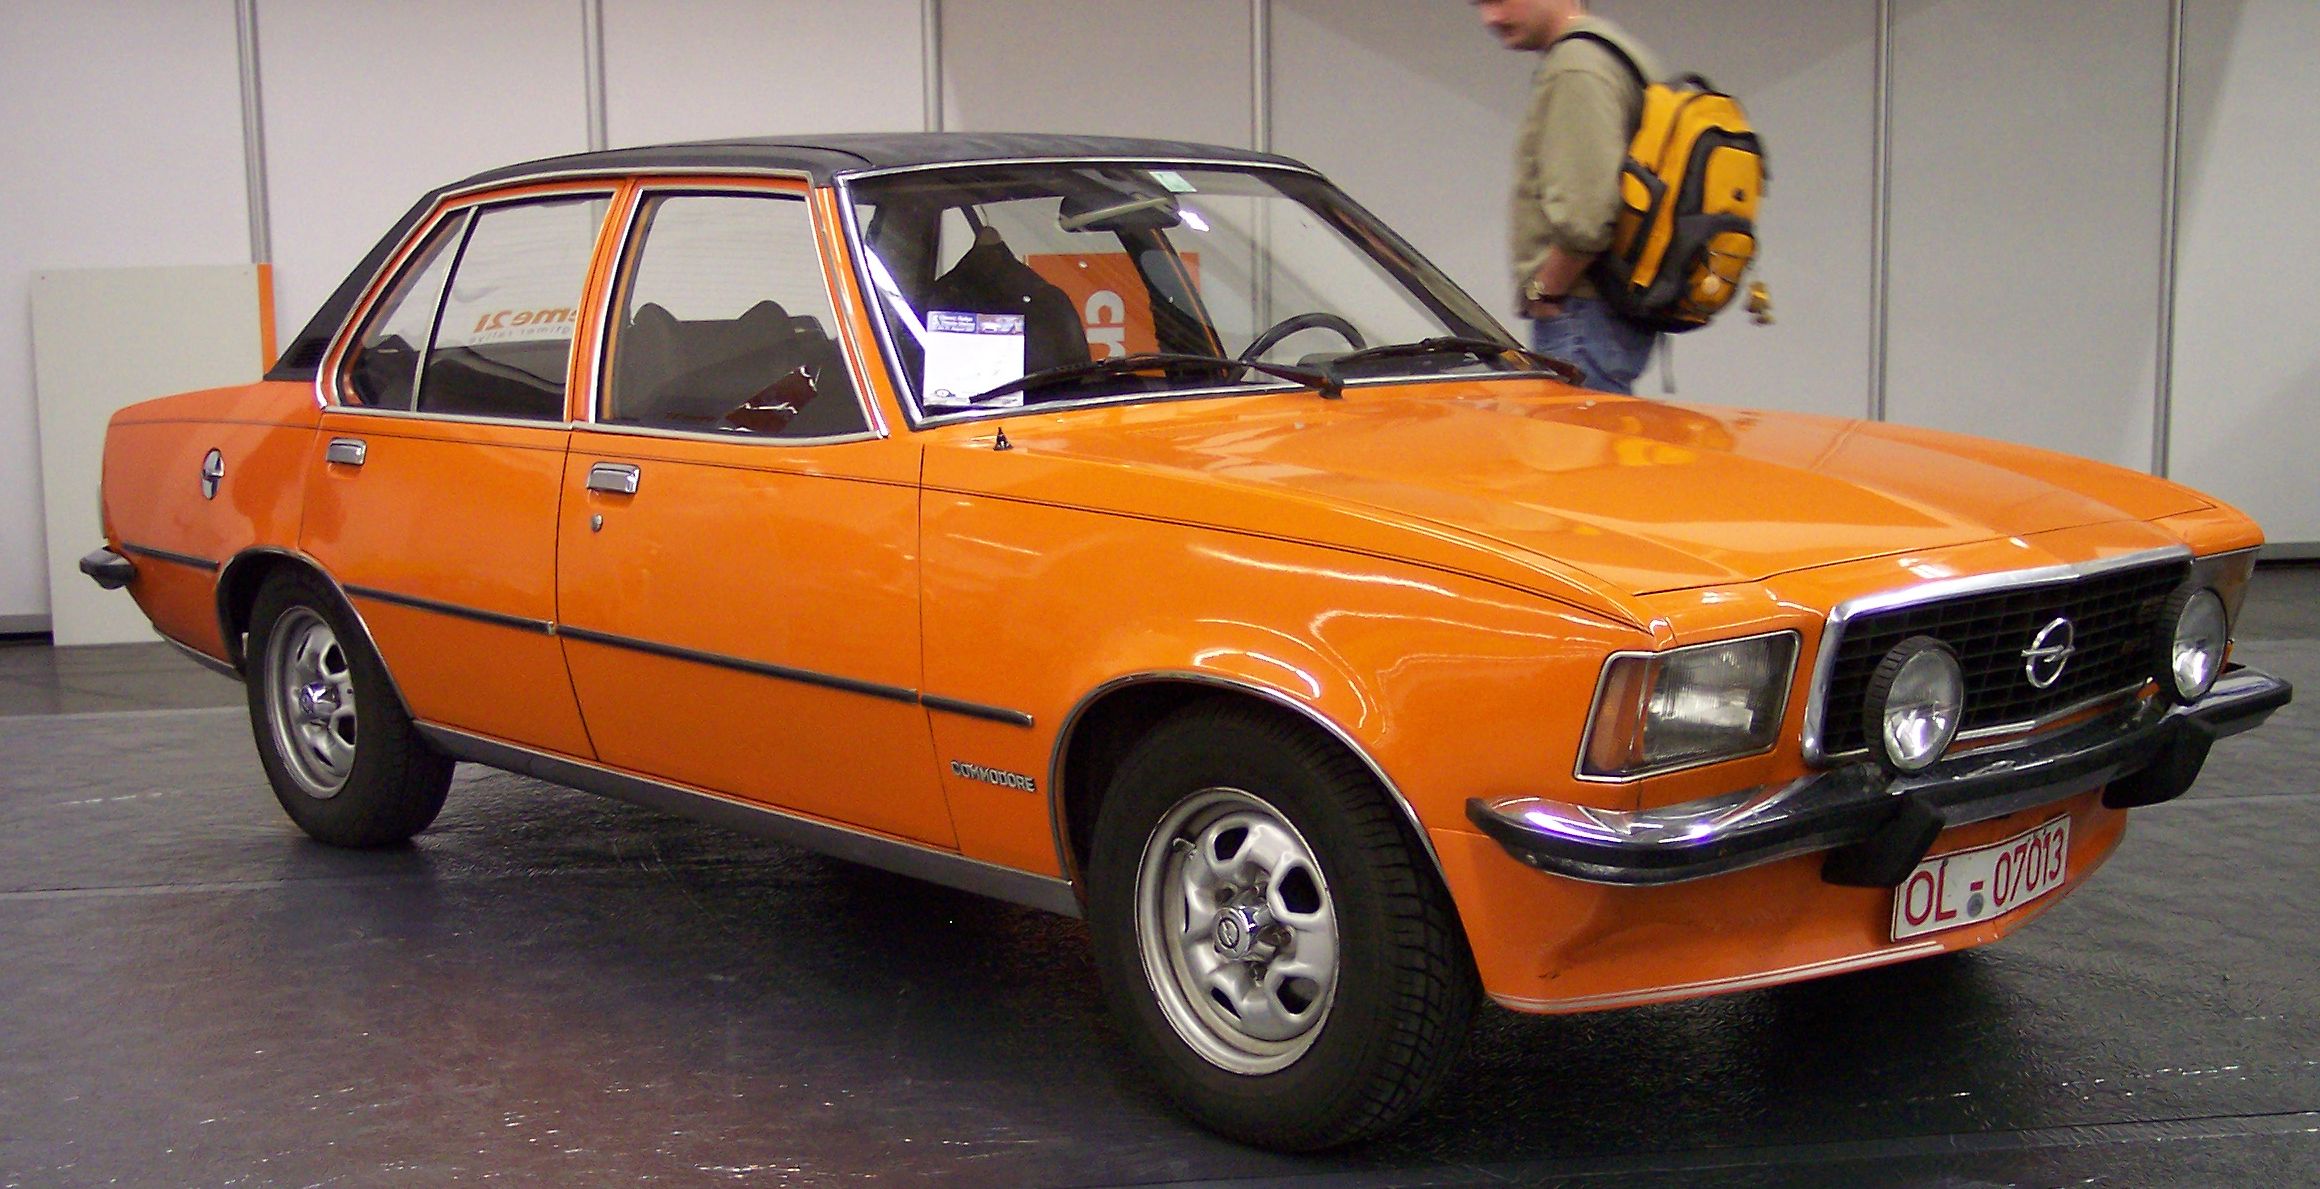 File:Opel Commodore vr orange TCE.jpg - Wikimedia Commons